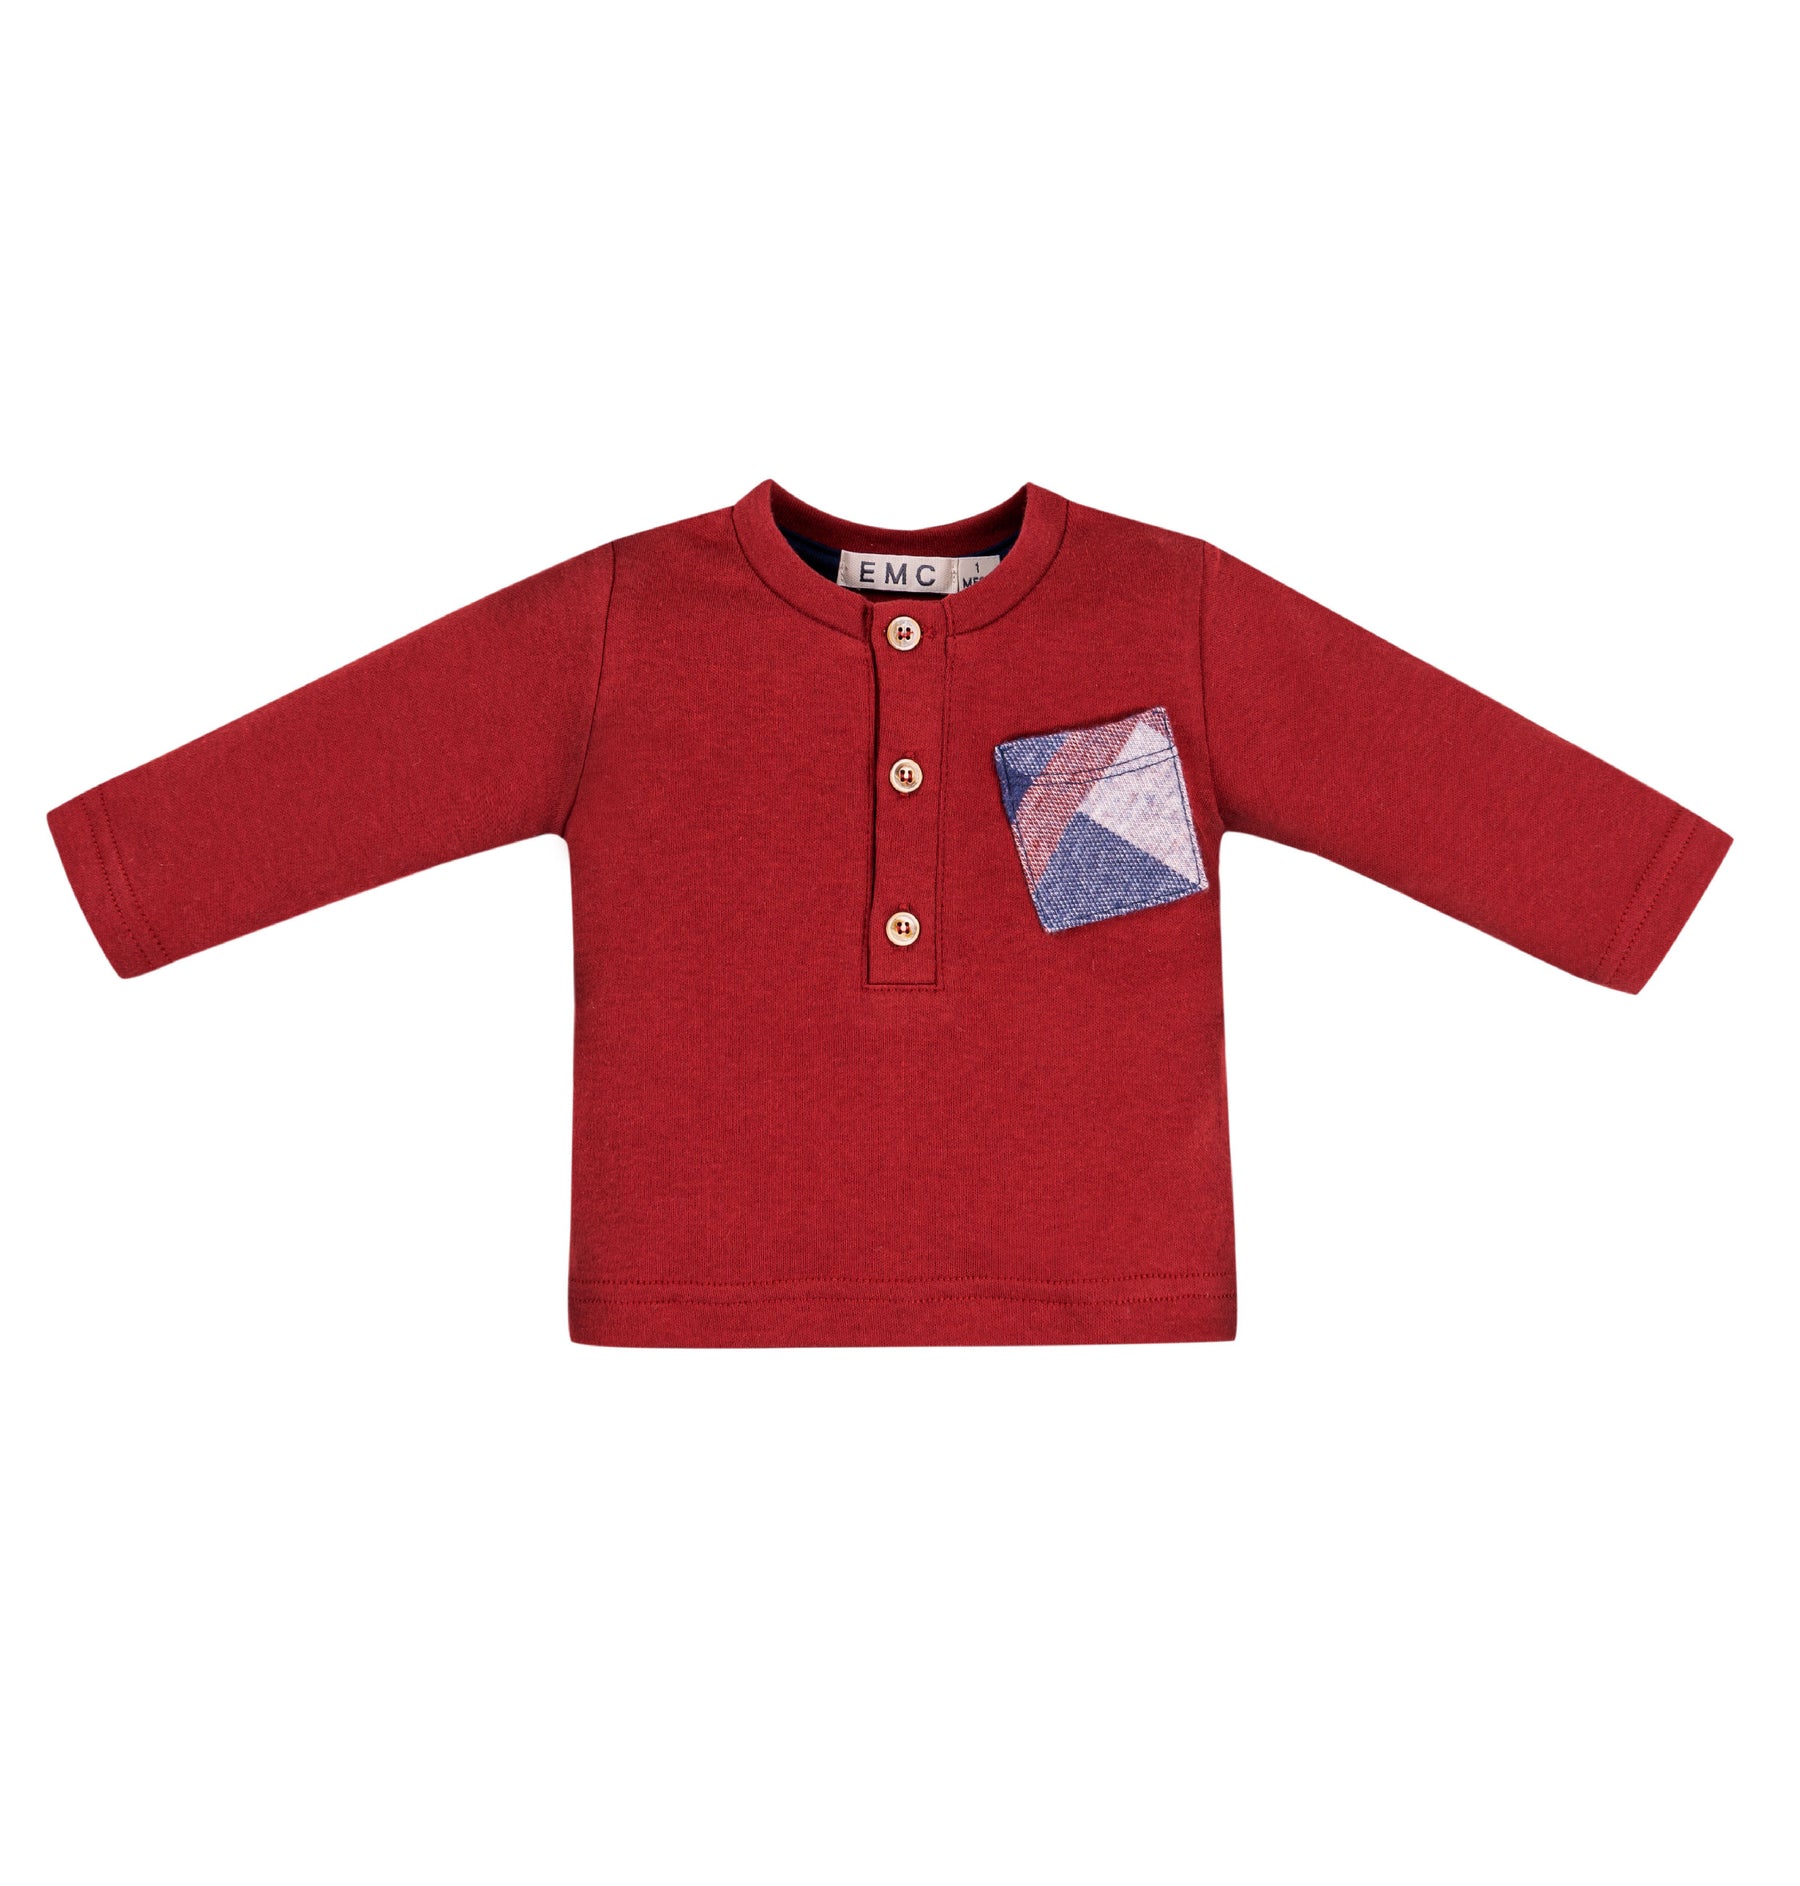 Emc Red Pocket T-Shirt